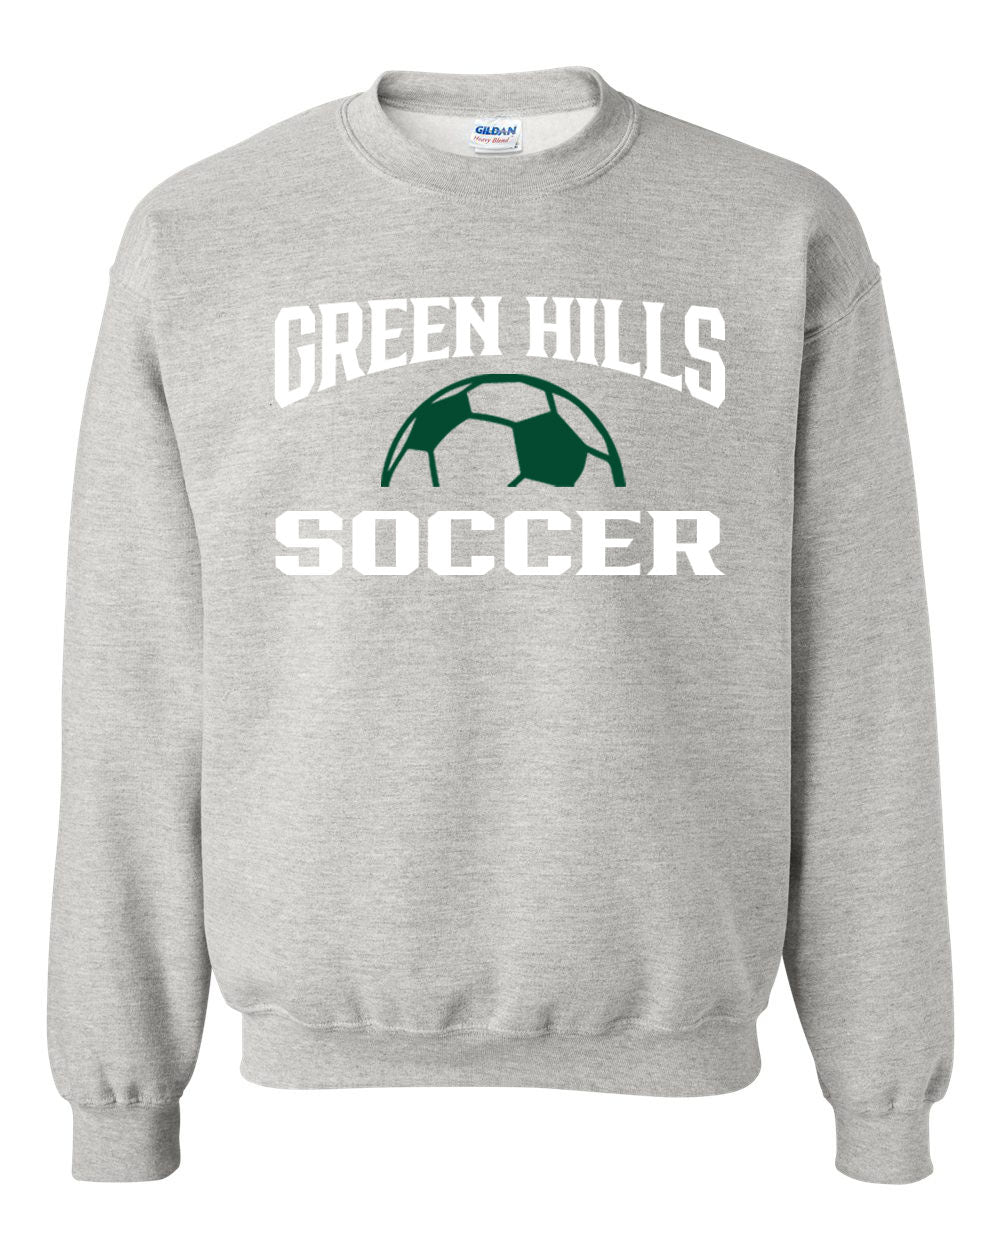 Green Hills Soccer Design 1 non hooded sweatshirt